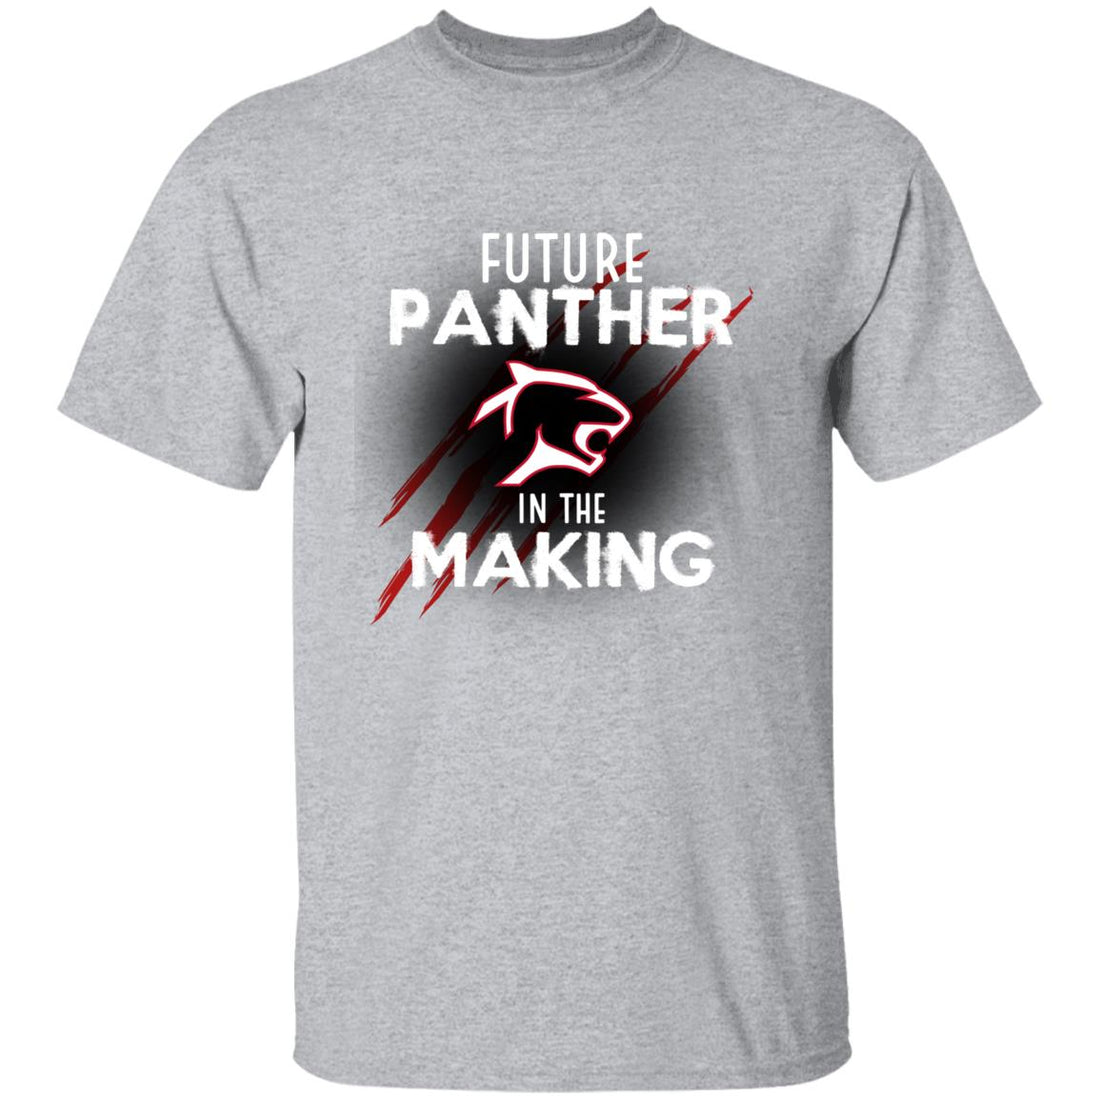 Future Panther Youth 5.3 oz 100% Cotton T-Shirt - T-Shirts - Positively Sassy - Future Panther Youth 5.3 oz 100% Cotton T-Shirt